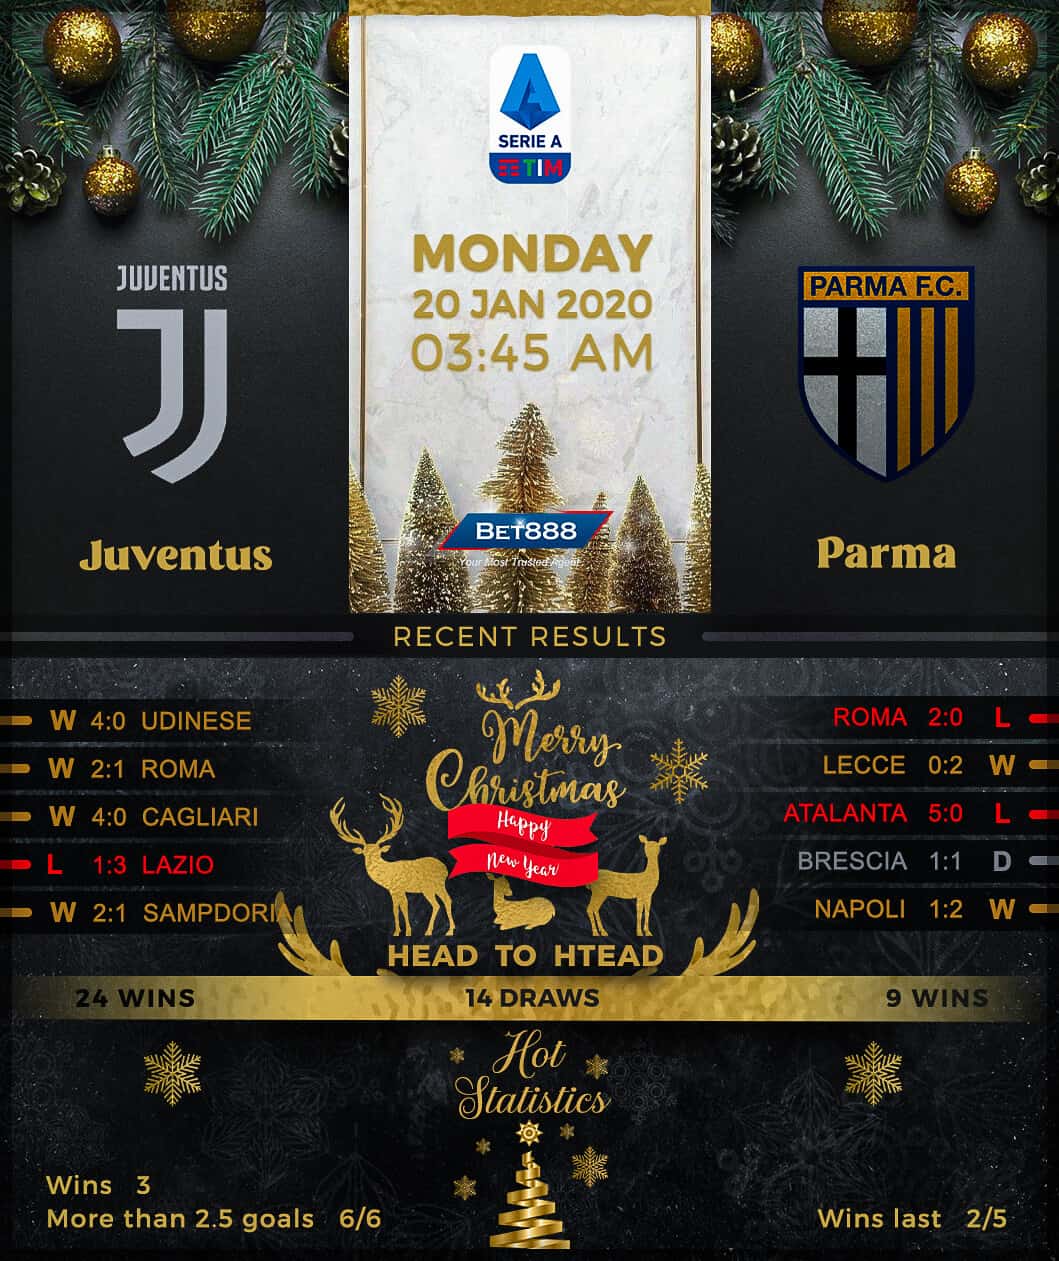 Juventus vs Parma 20/01/20